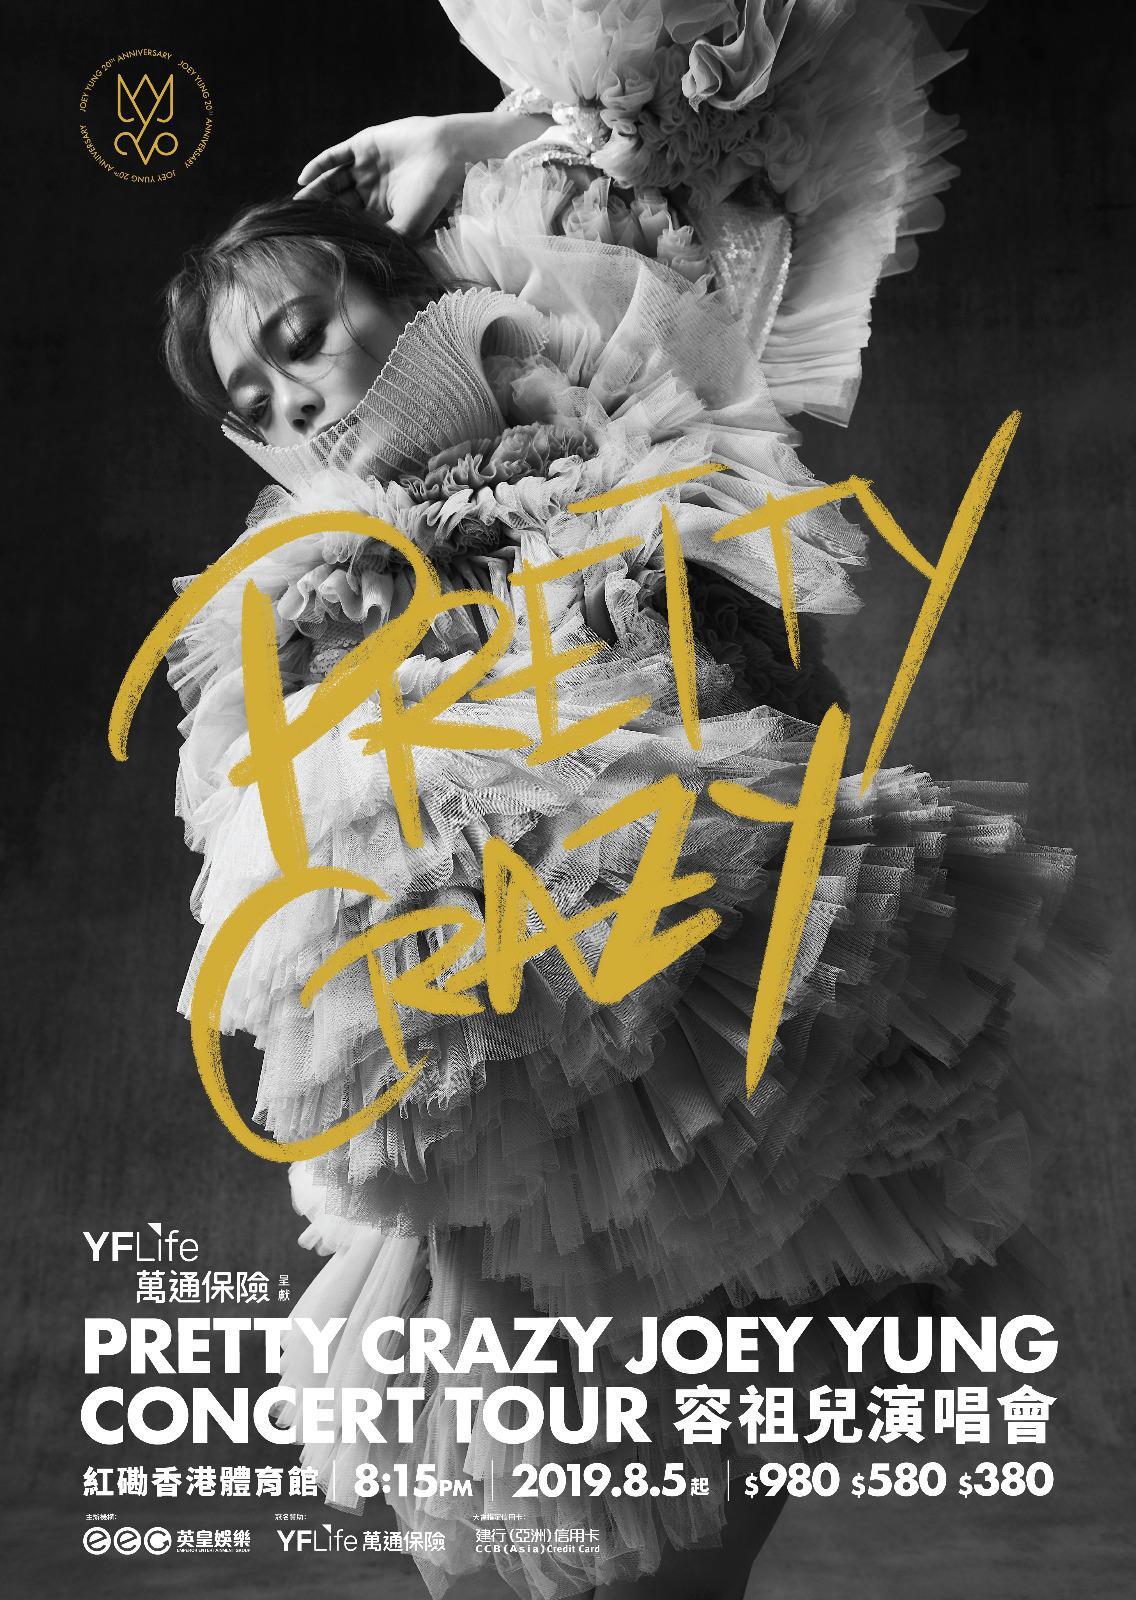 YF Life Title Sponsors “YF Life PRETTY CRAZY JOEY YUNG CONCERT TOUR”